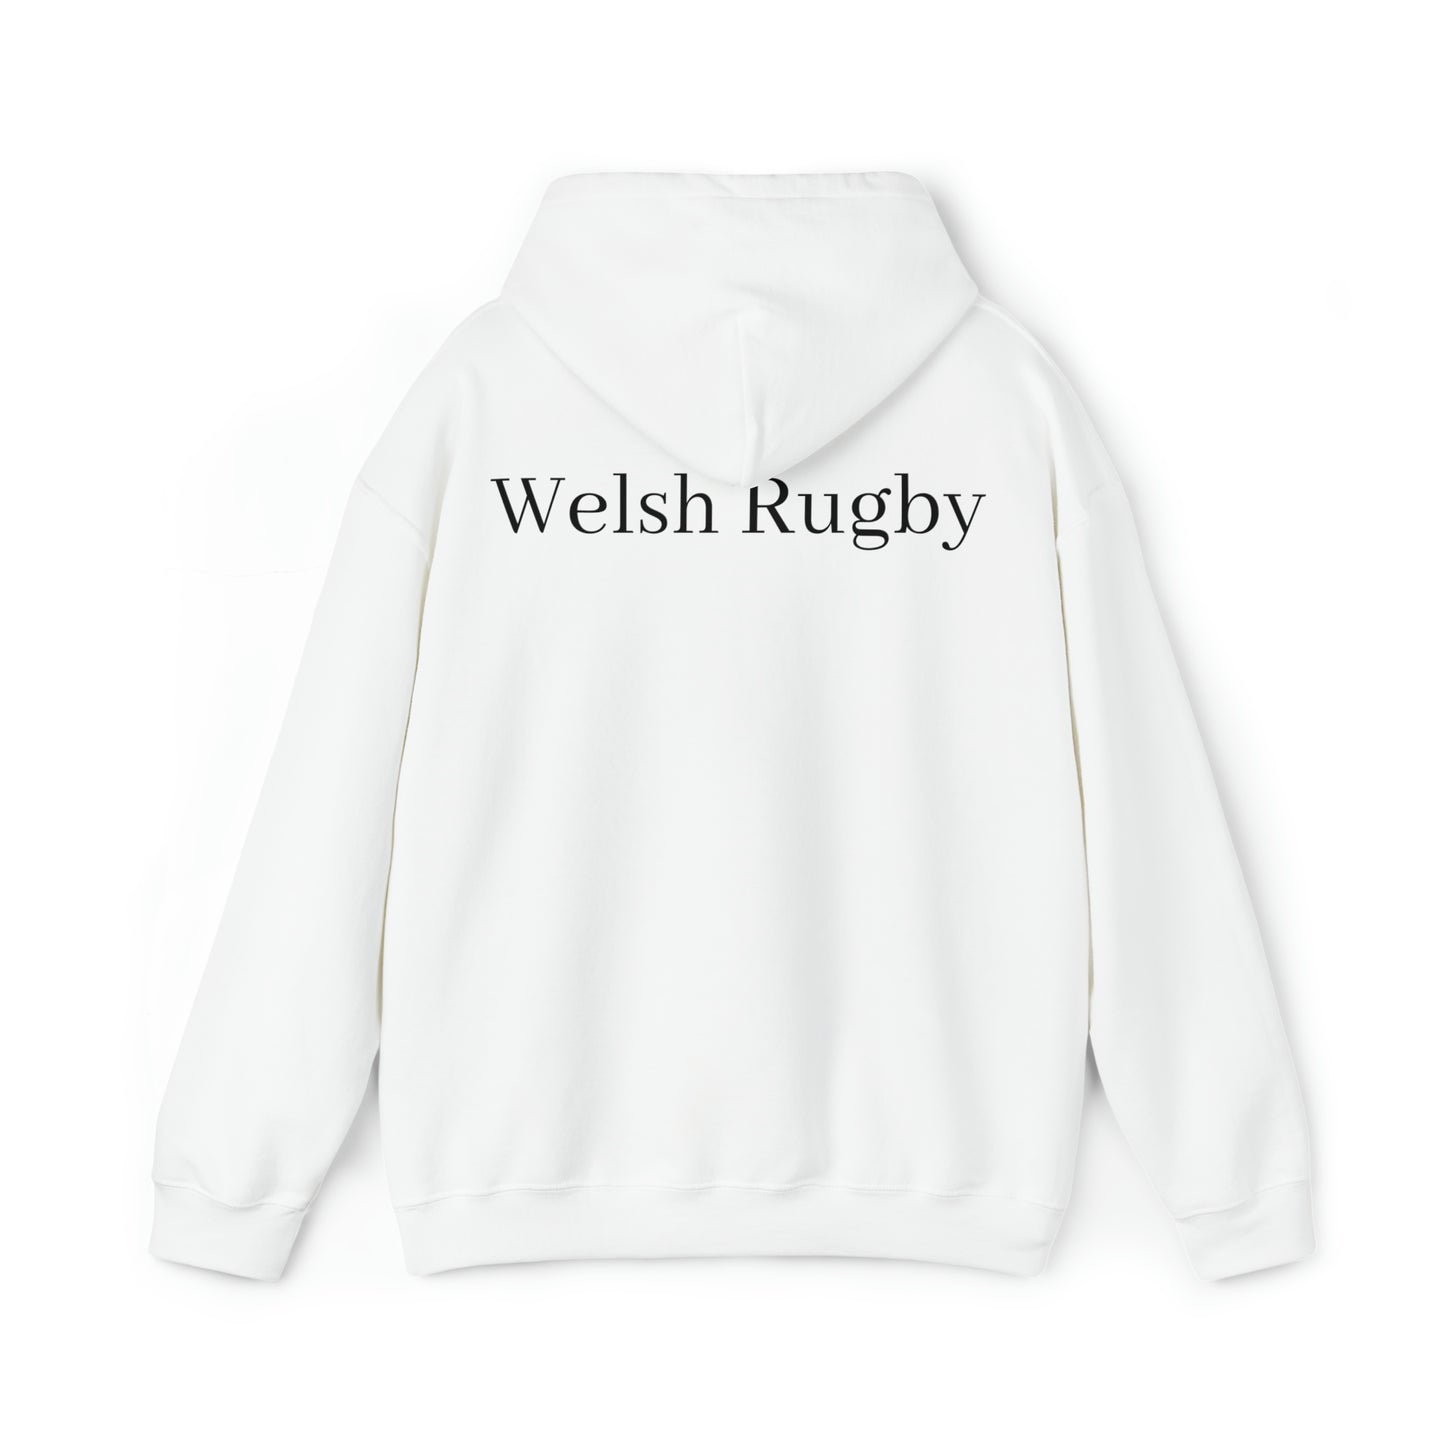 Post Match Wales - light hoodies